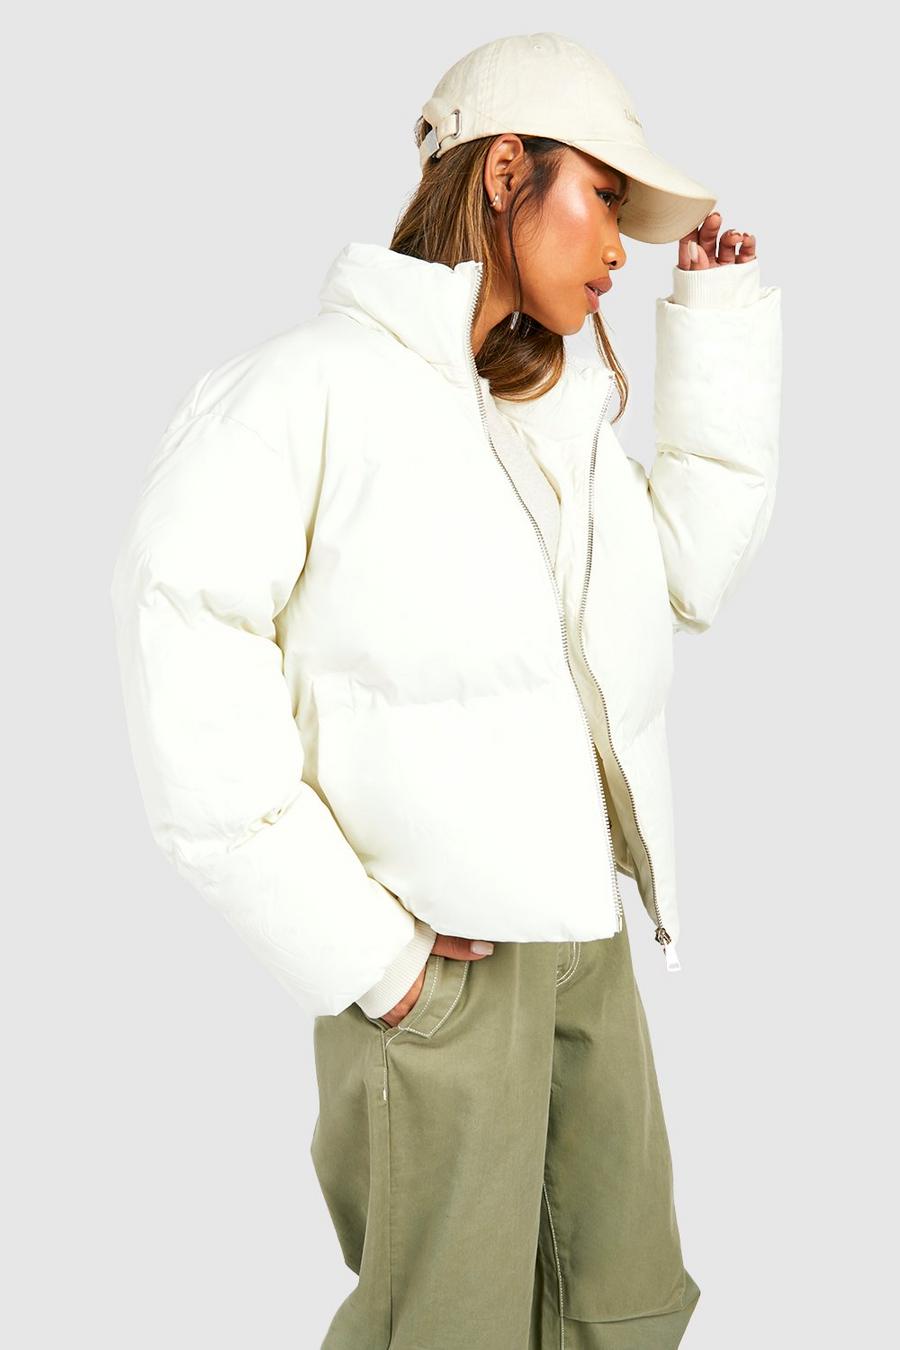 Women's Puffer Jackets, Bubble Coats